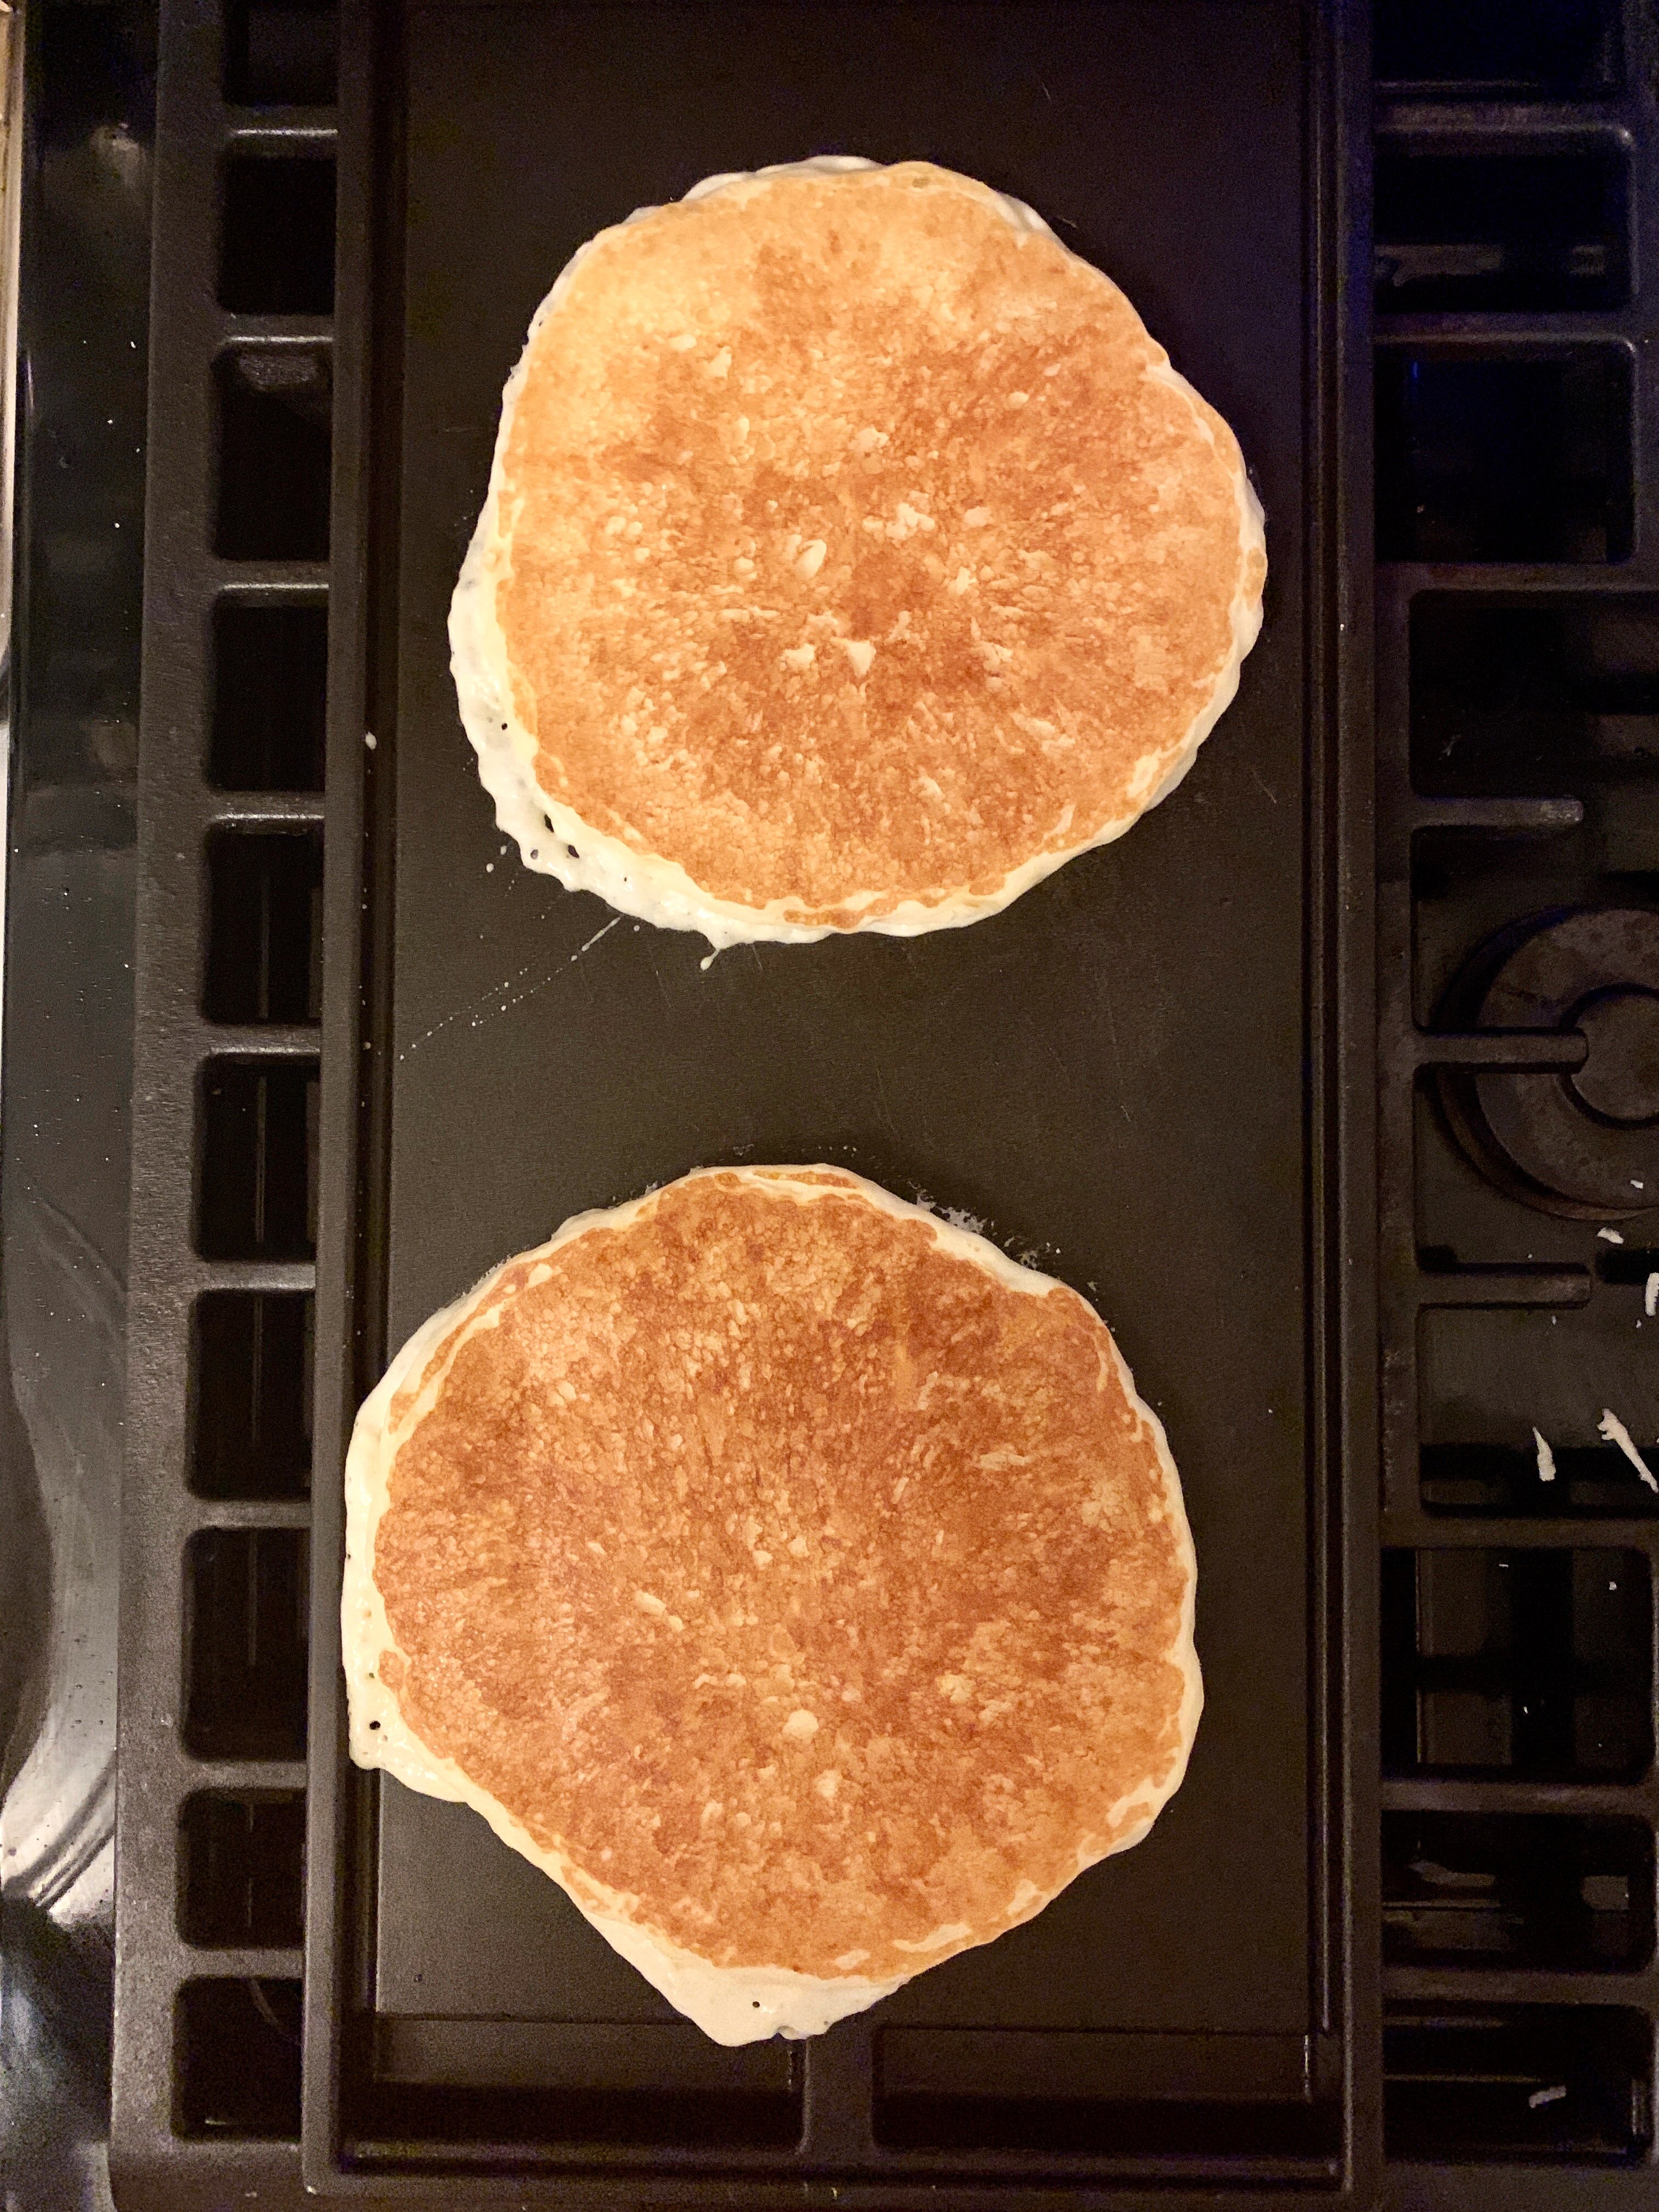 Best Pancake Recipe - How To Make The Perfect Pancake